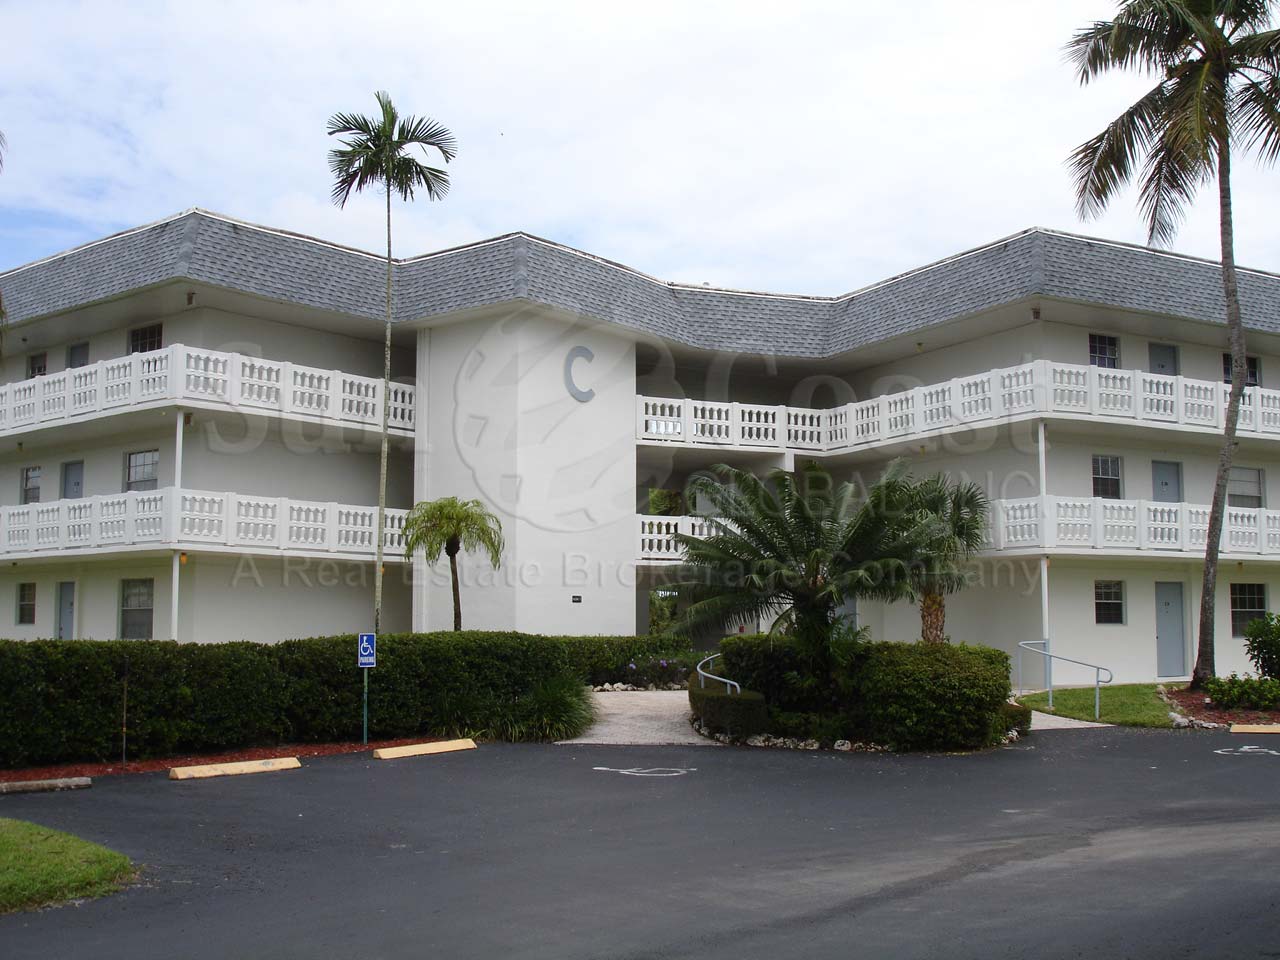 Vista Palms Condominiums